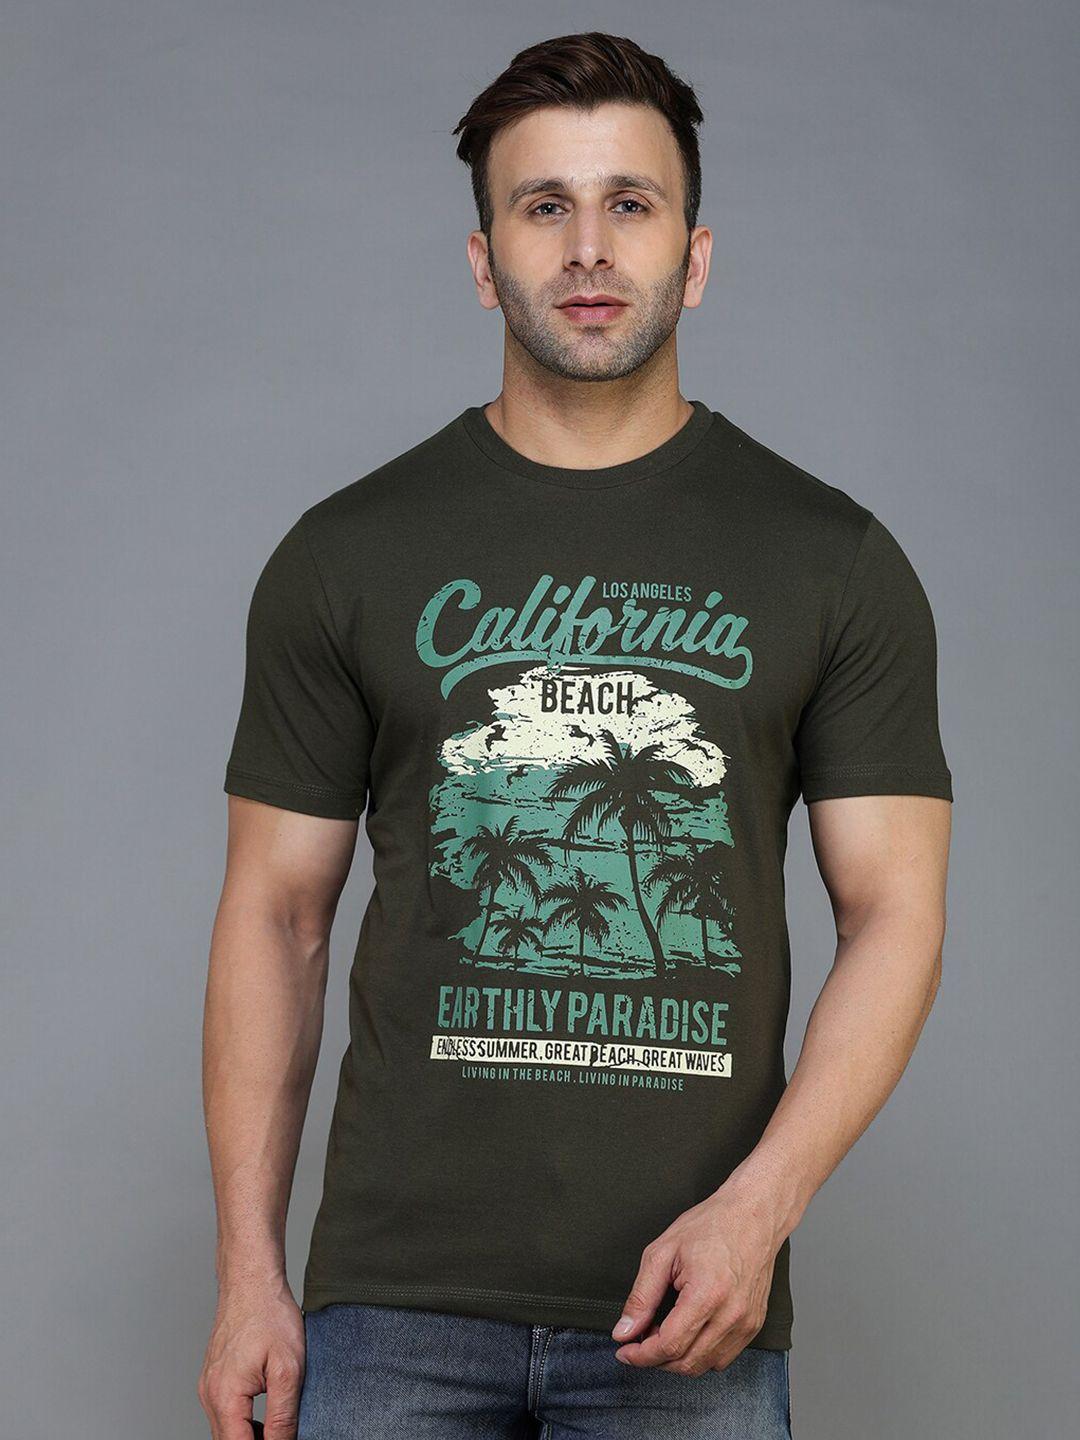 tqs men olive green & dark charcoal typography printed applique t-shirt